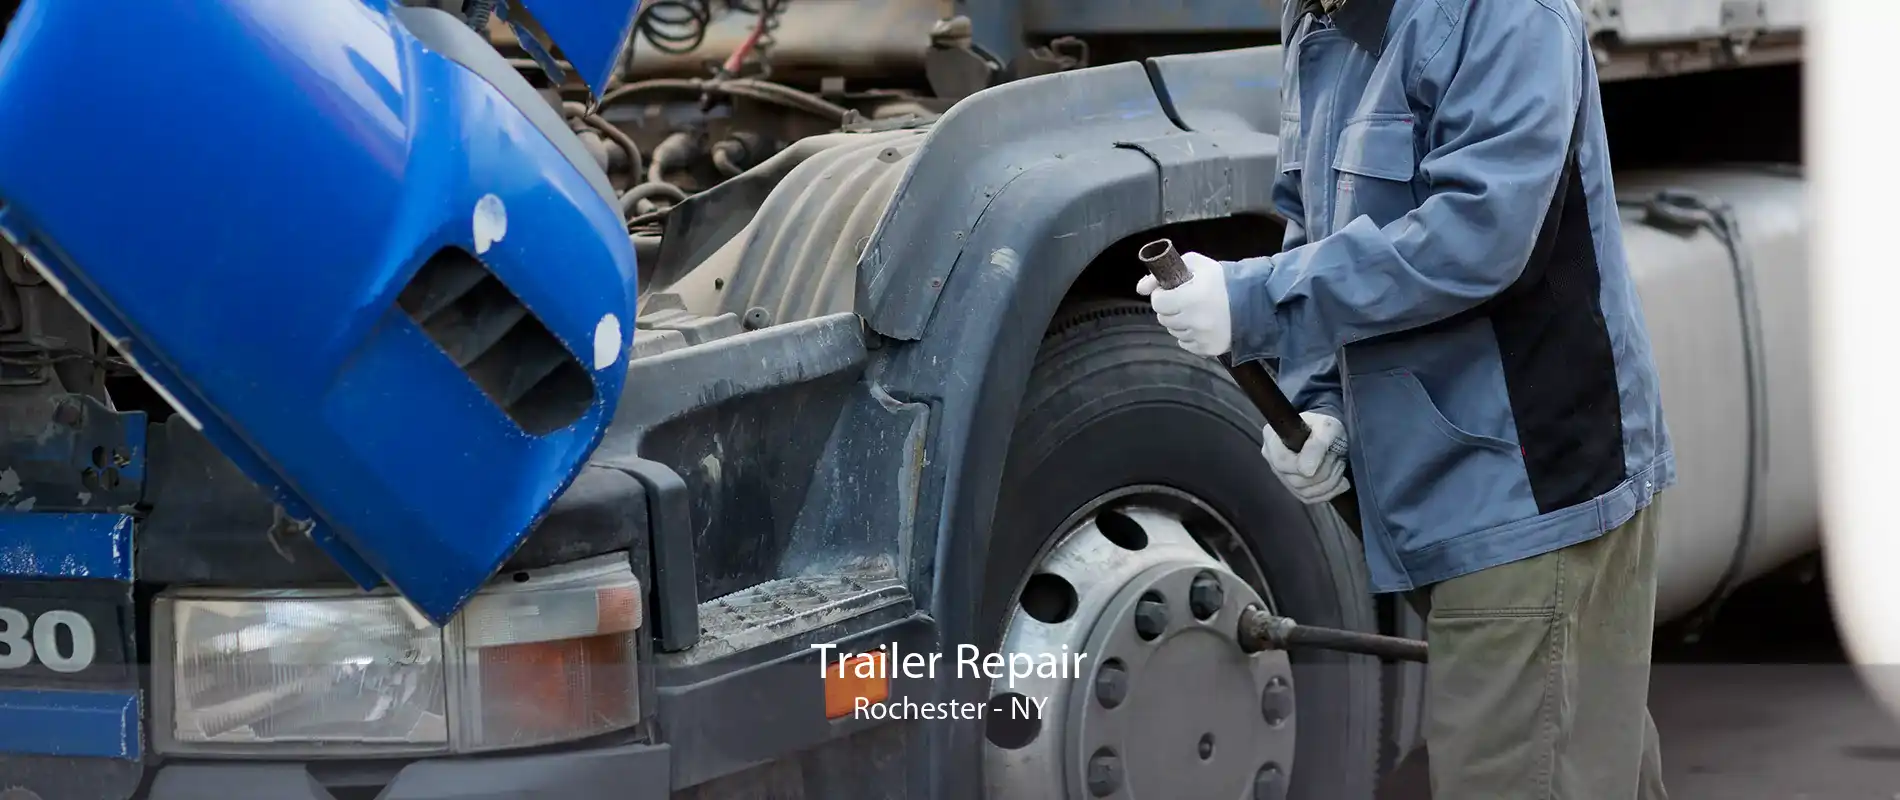 Trailer Repair Rochester - NY